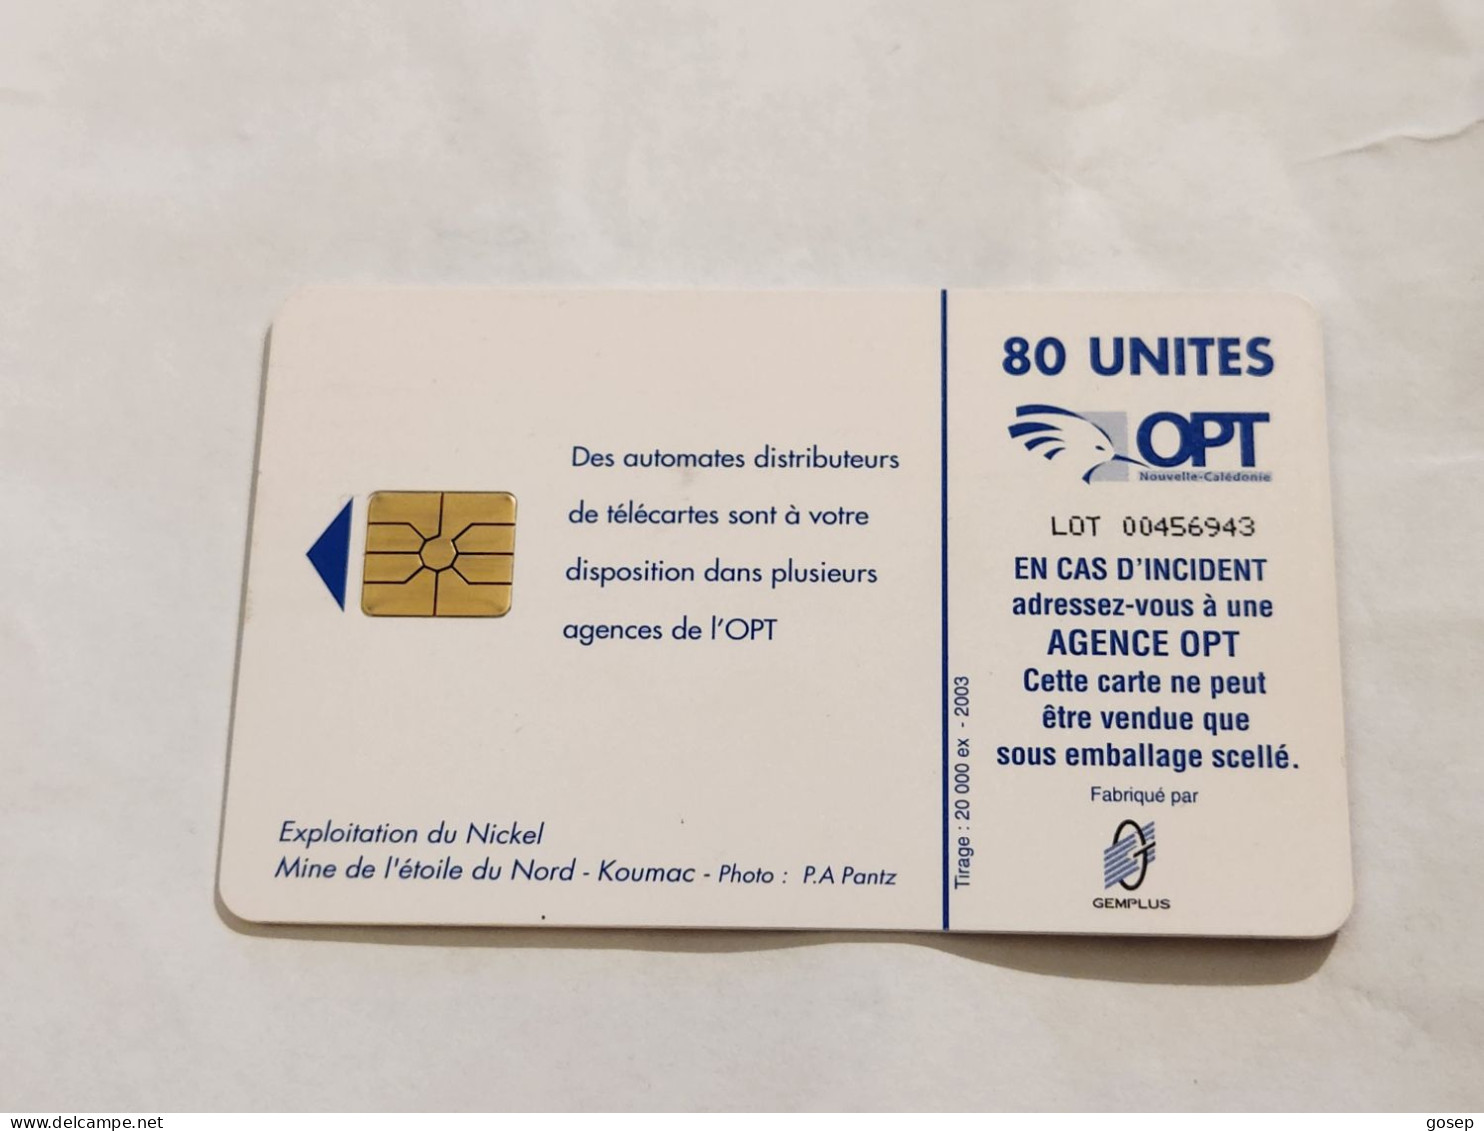 New Caledonia-(NC-OPC-109)-Exploitation Du Nickel-(13)-(80units)(tirage-20.000)-(01/2000)-used Card+1card Prepiad Free - New Caledonia